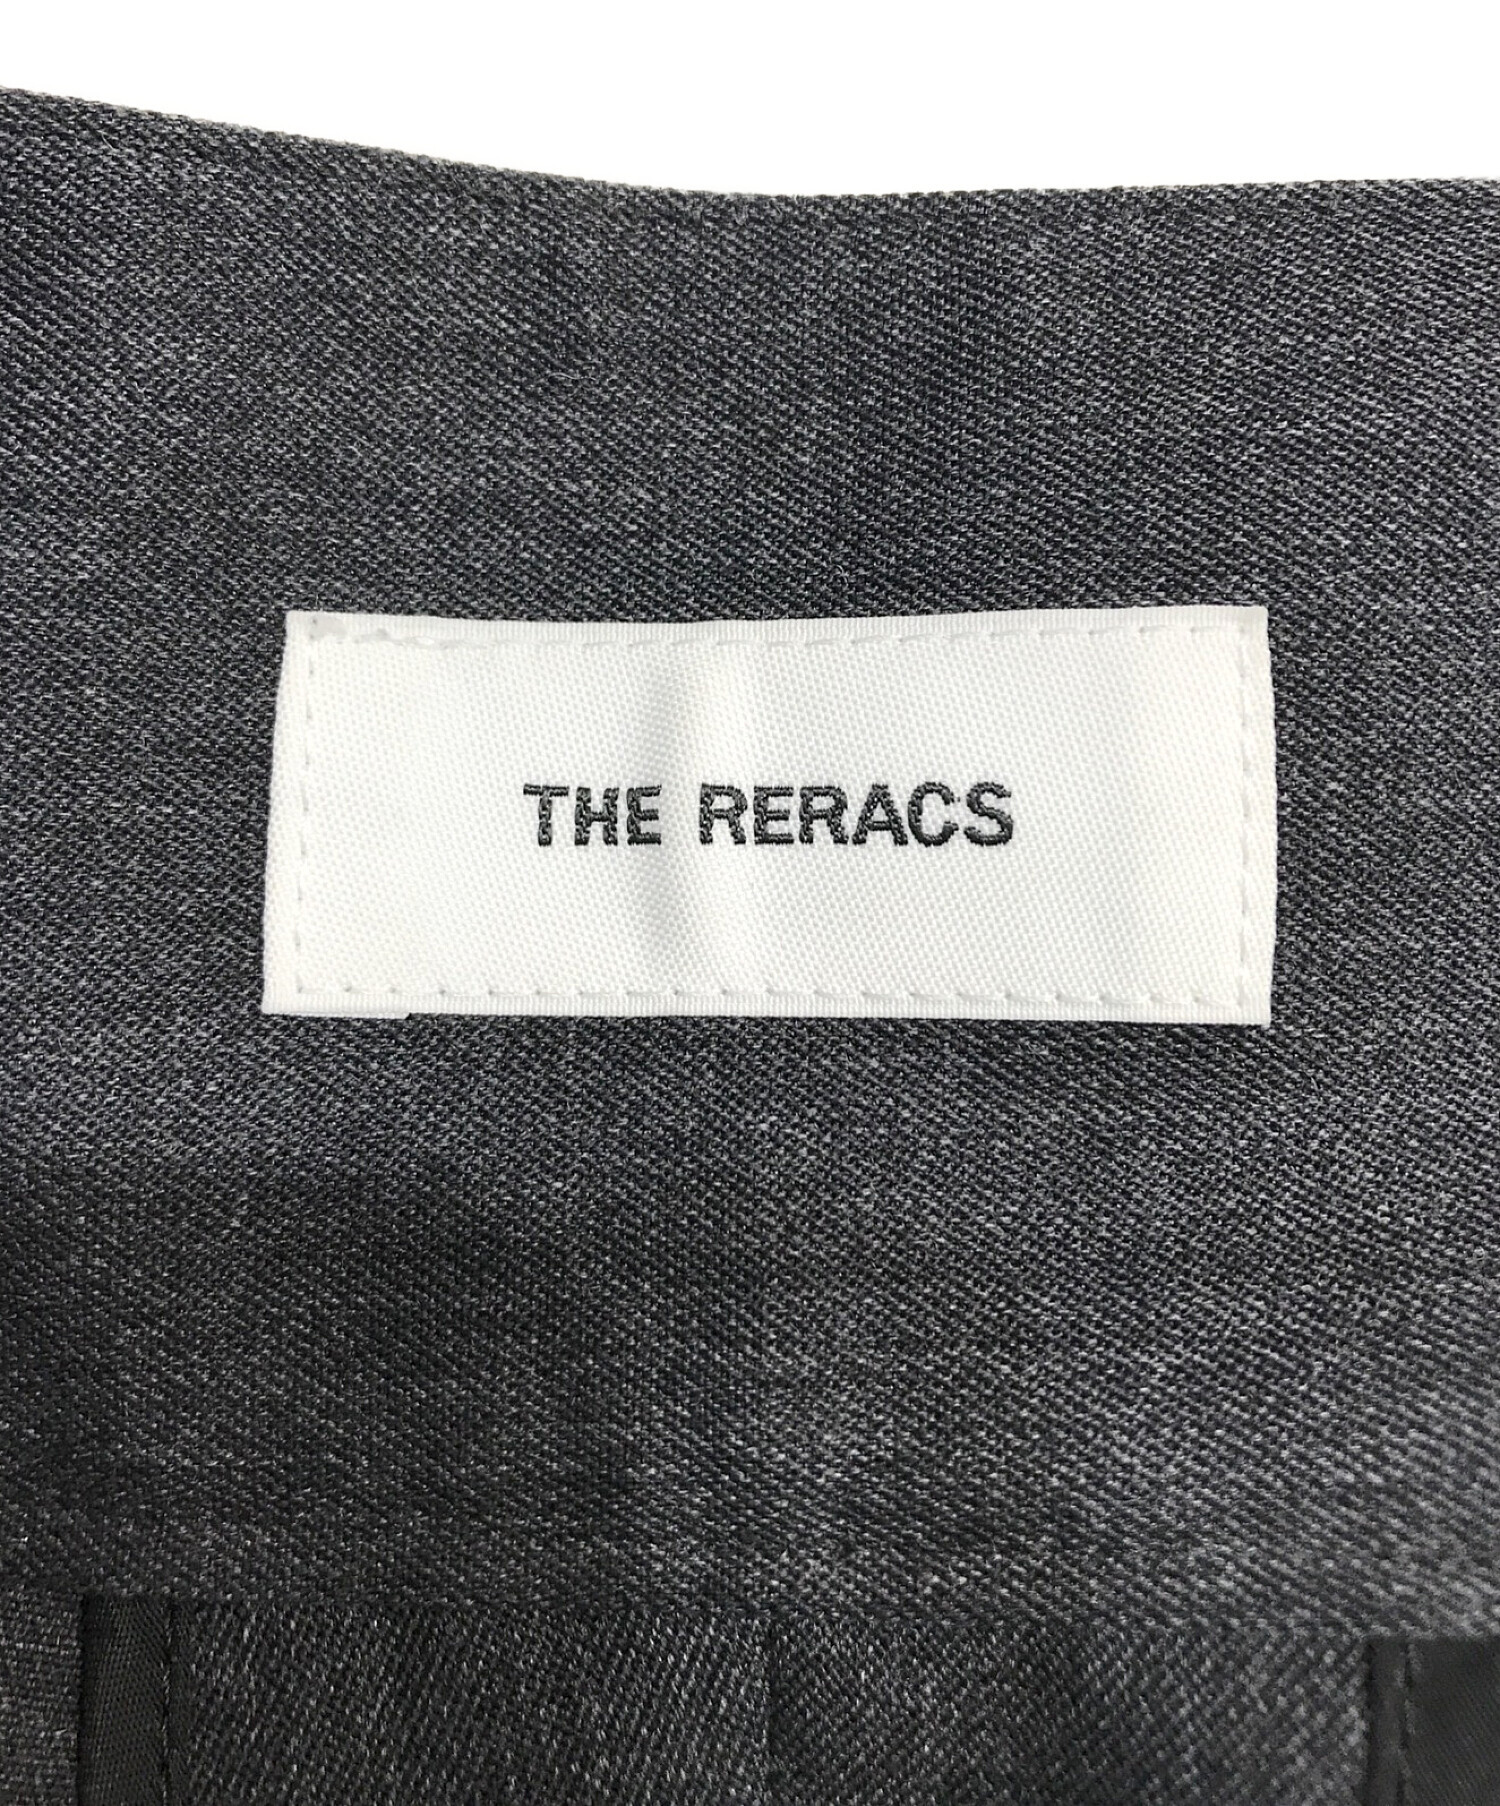 THE RERACS (ザ リラクス) GURKHA SLACKS グレー サイズ:48